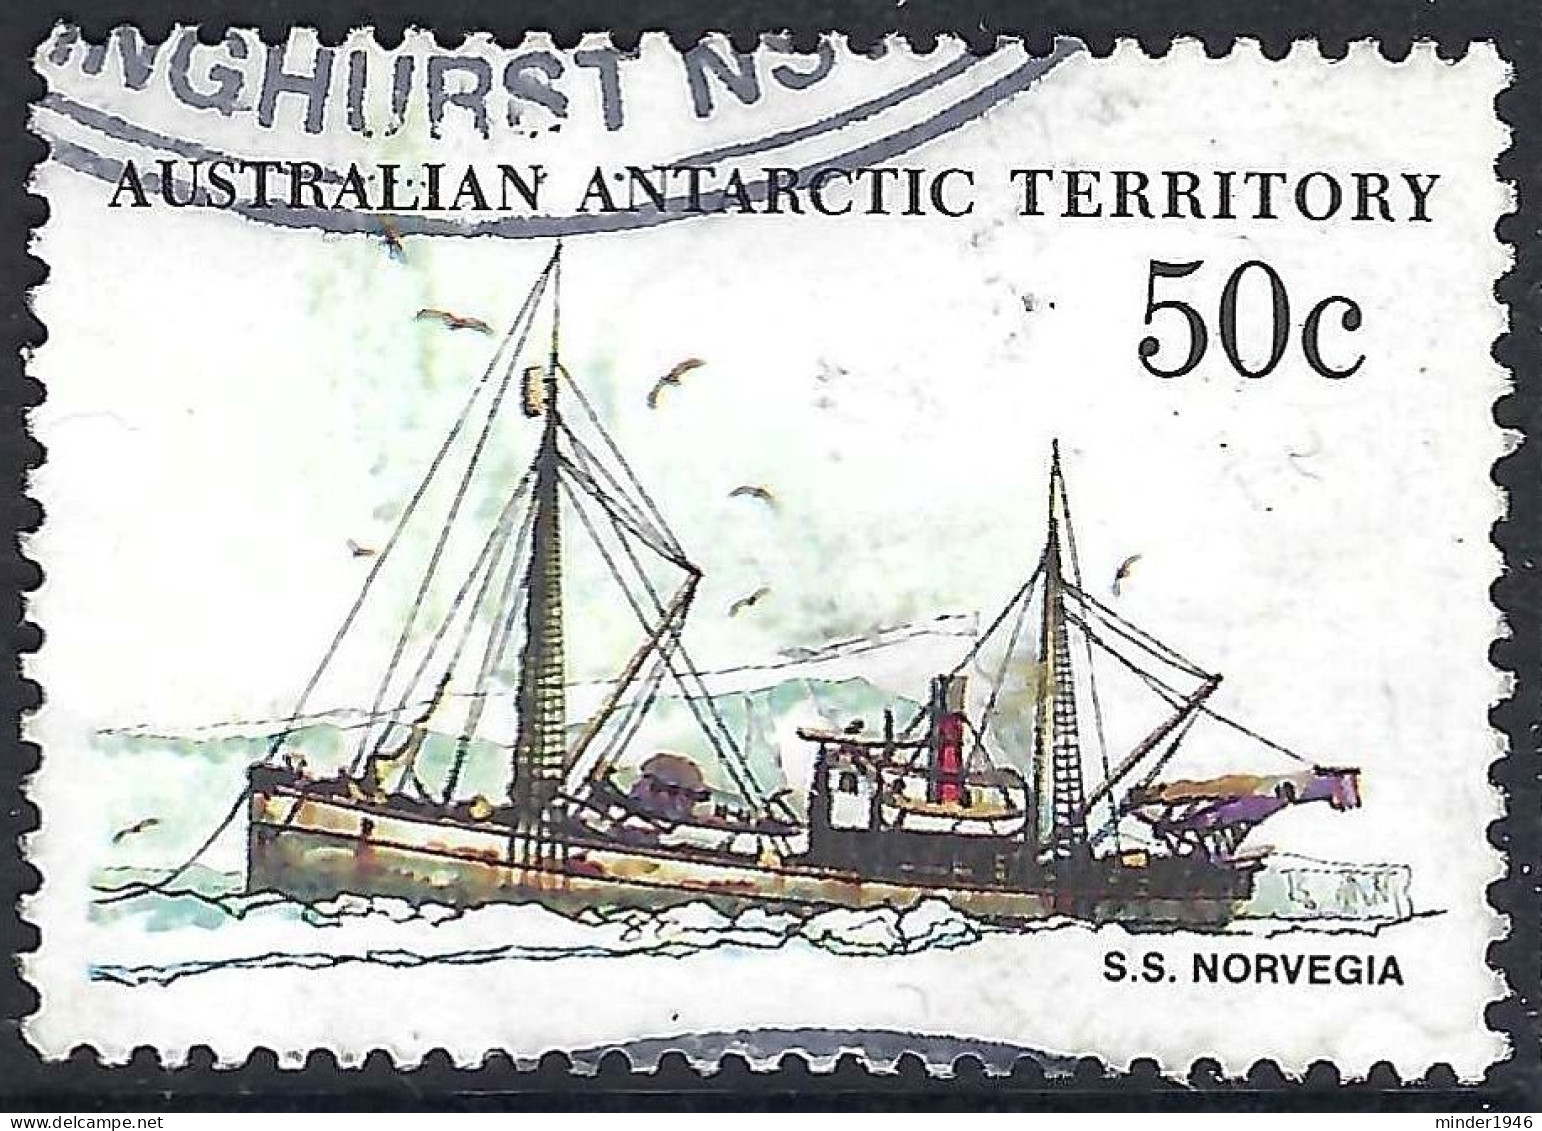 AUSTRALIAN ANTARCTIC TERRITORY (AAT) 1979 QEII 50c Multicoloured 'Ships, S.S Norvegia SG50 FU - Gebruikt